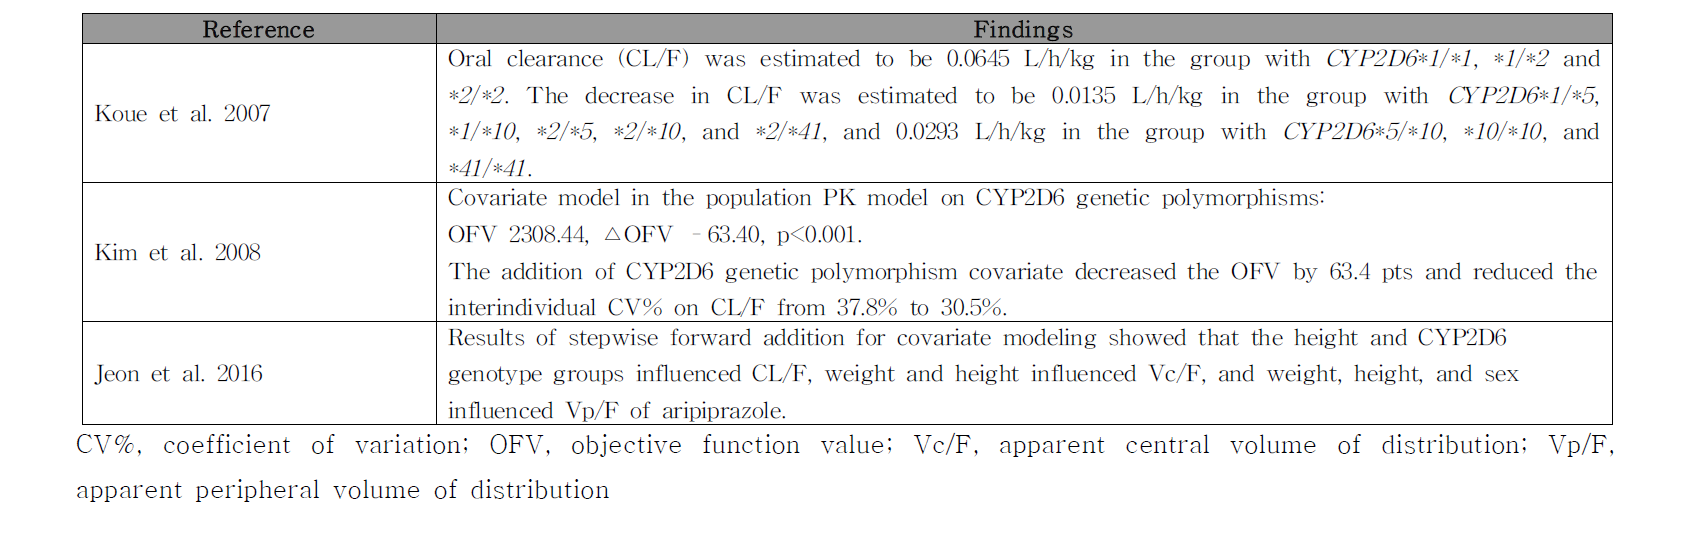 Aripiprazole과 CYP2D6 유전형에 대한 집단약동학(population PK) 연구 결과